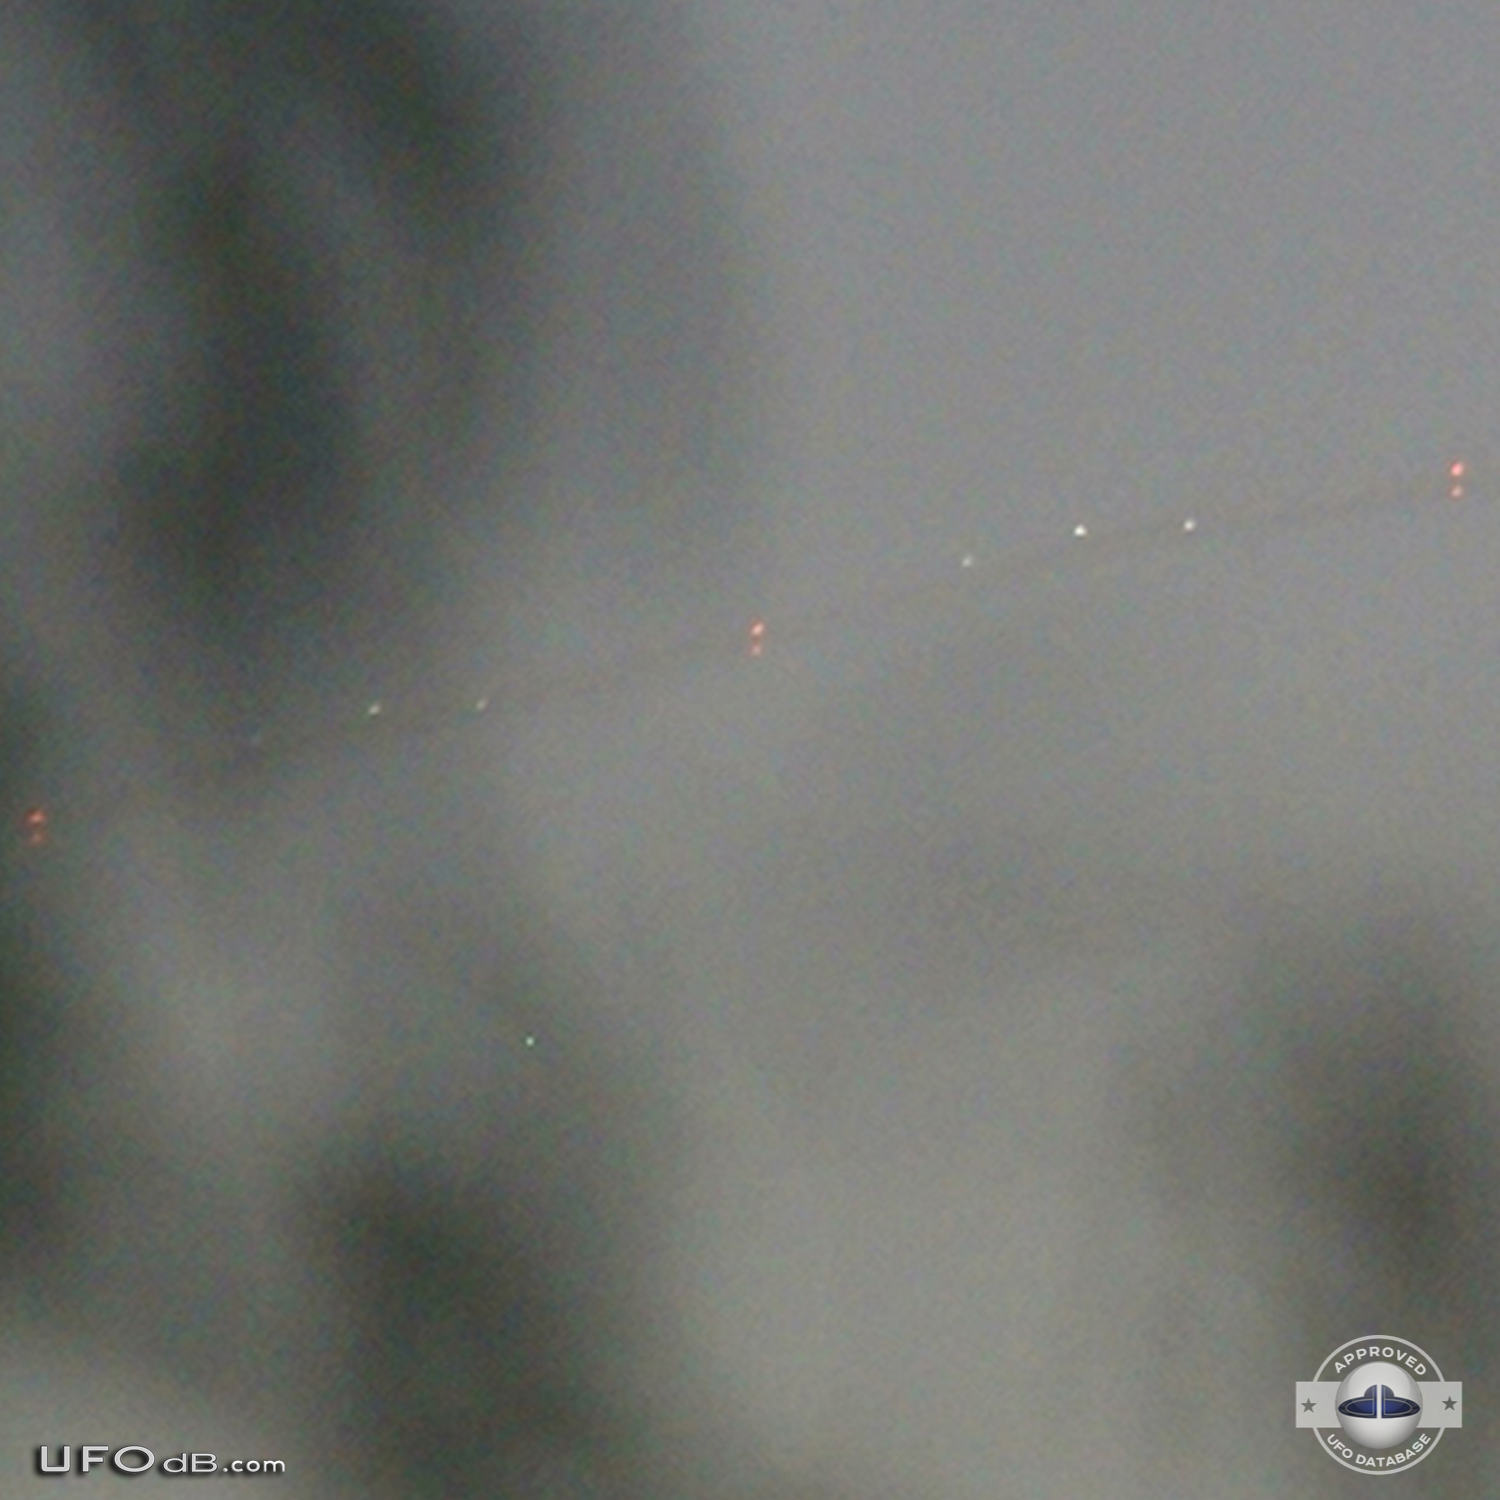 High quality Photo captures a Huge long UFO - Melbourne Australia 2009 UFO Picture #523-4